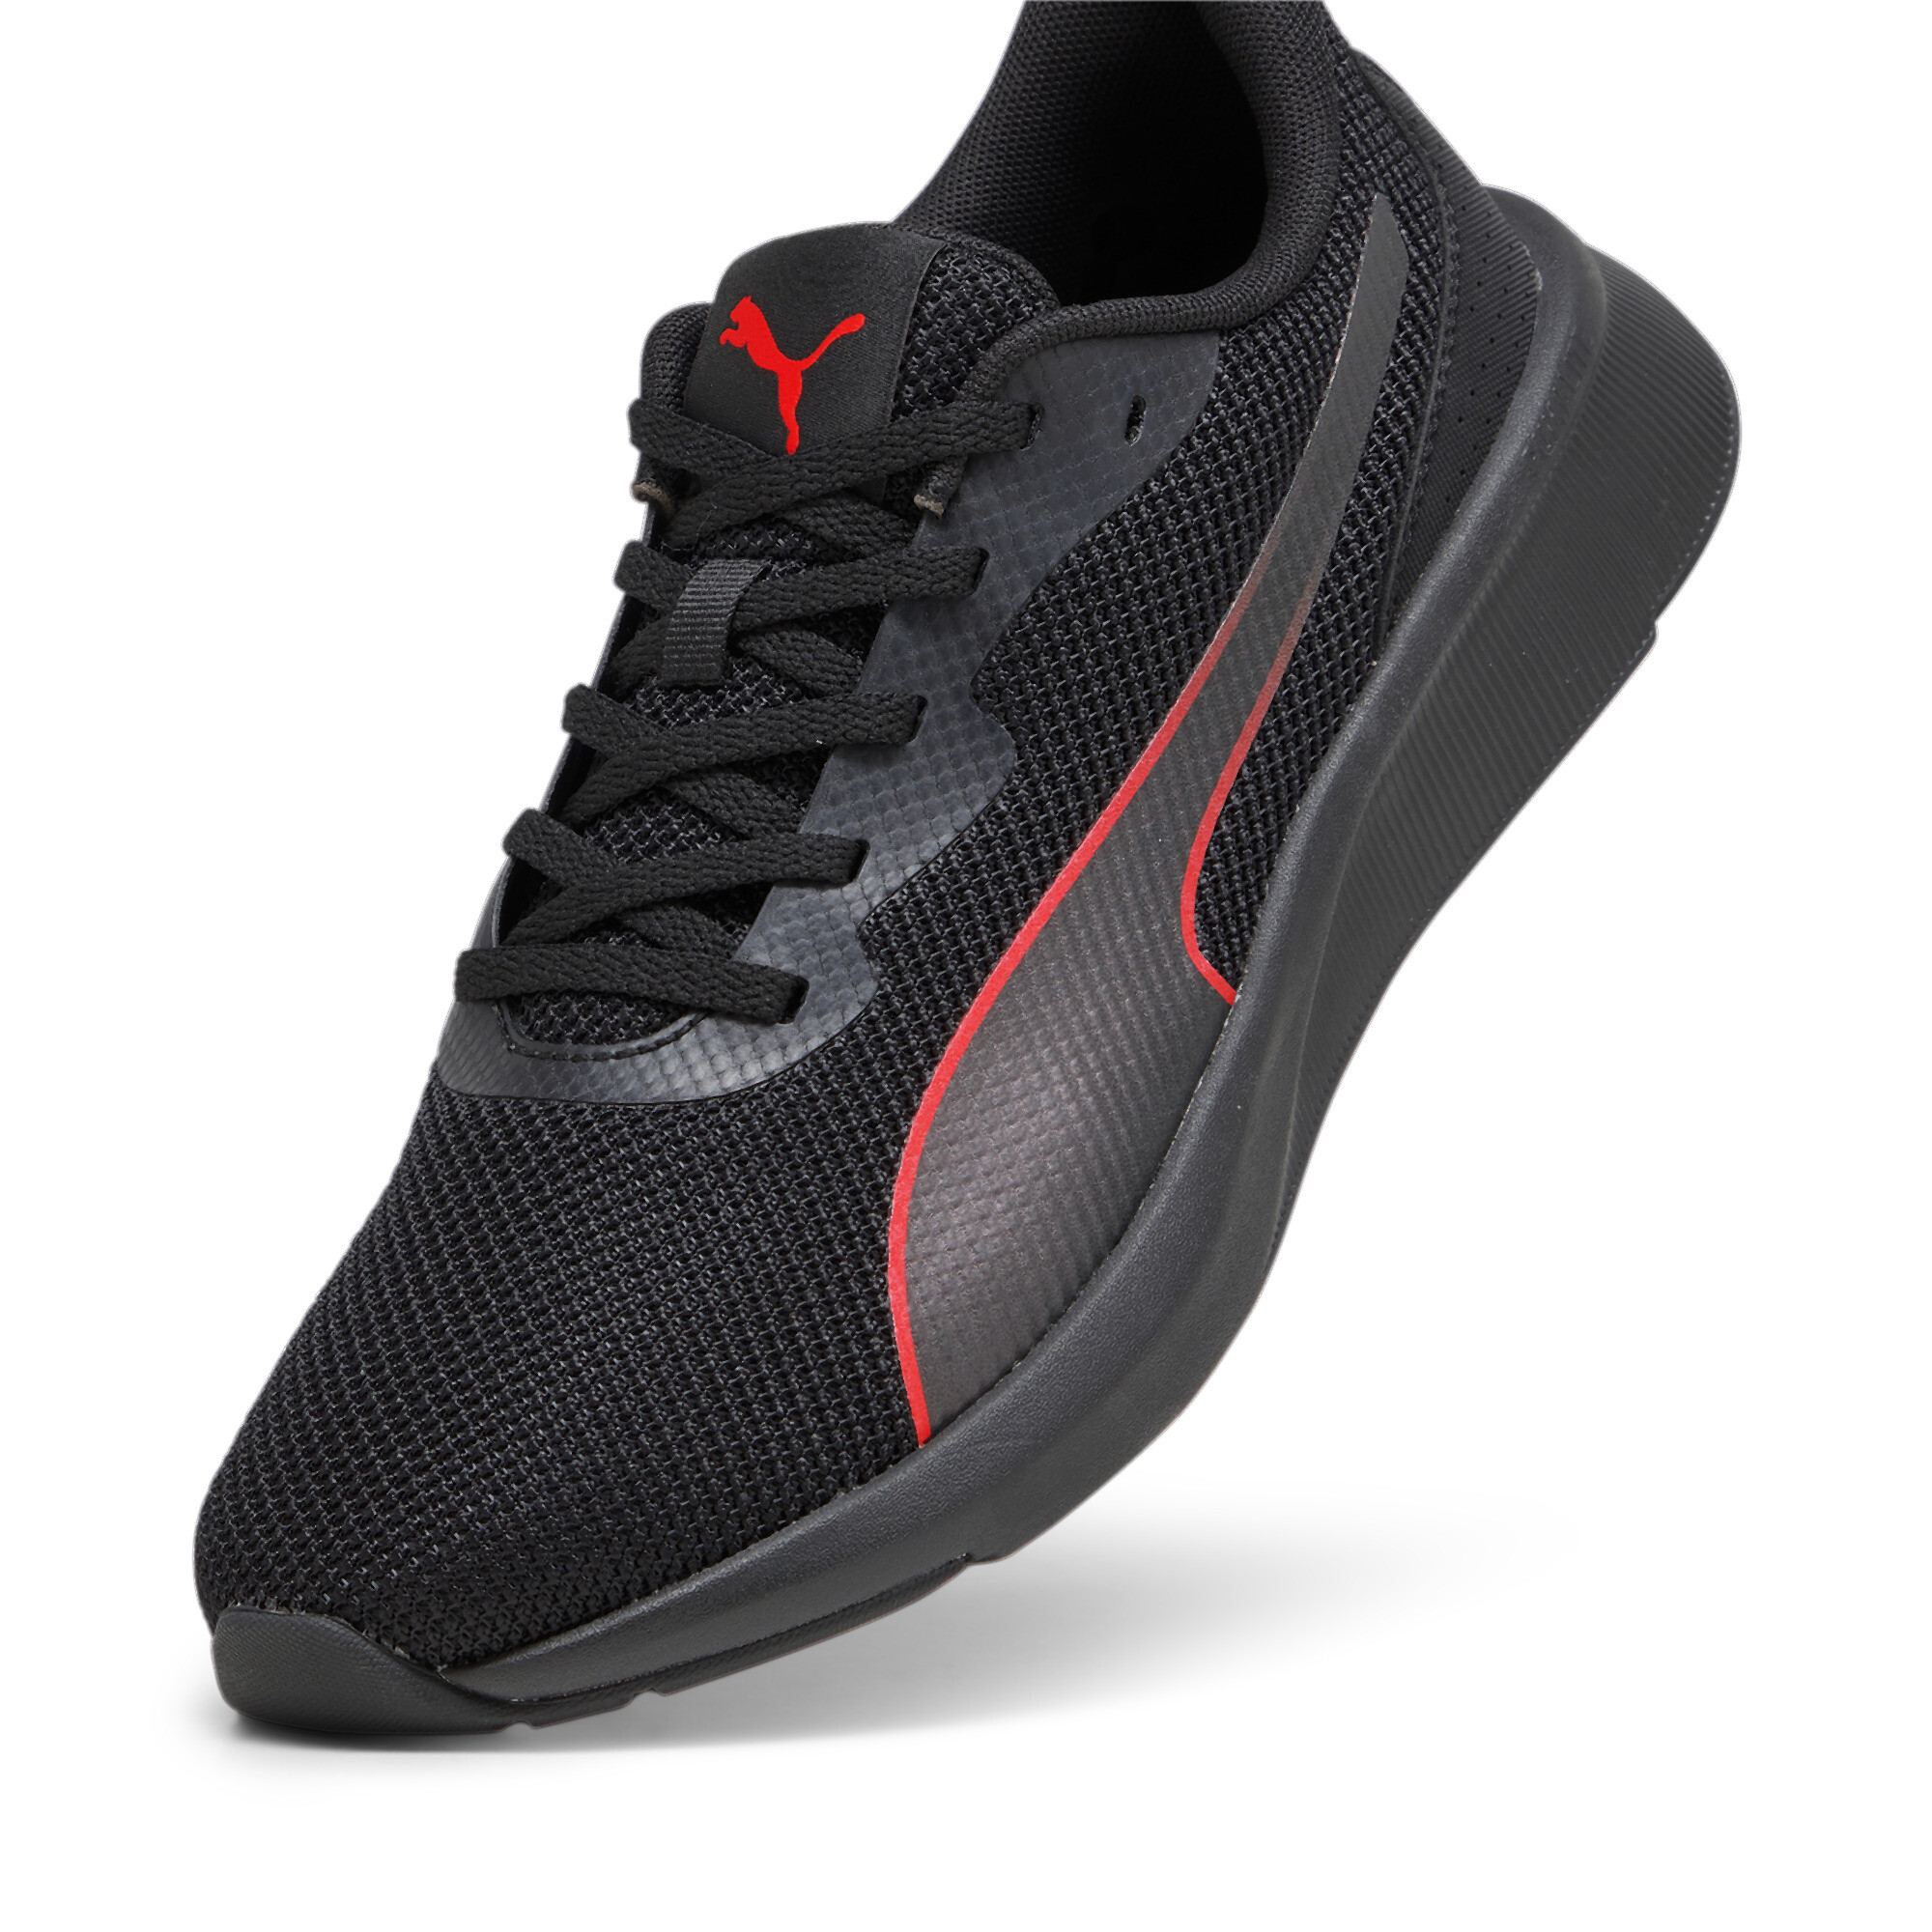 Men's PUMA Flyer Lite Mesh Running Shoes In Black, Size EU 37